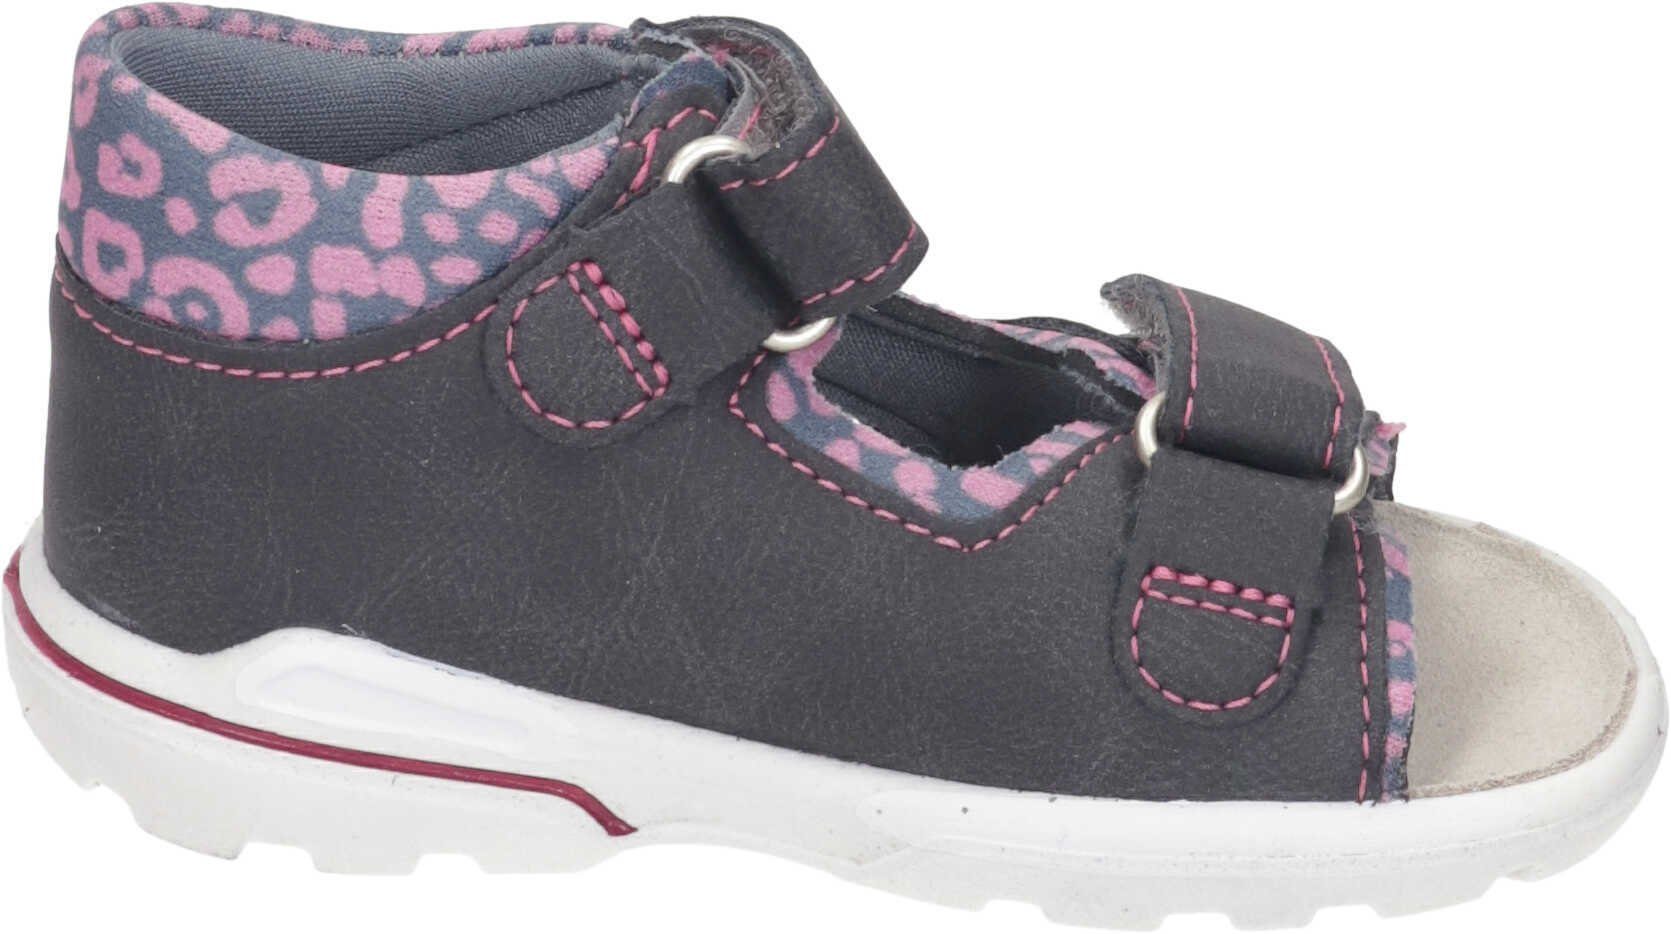 (480) Pepino Sandaletten aus Textil grigio/grau/rosada Outdoorsandale